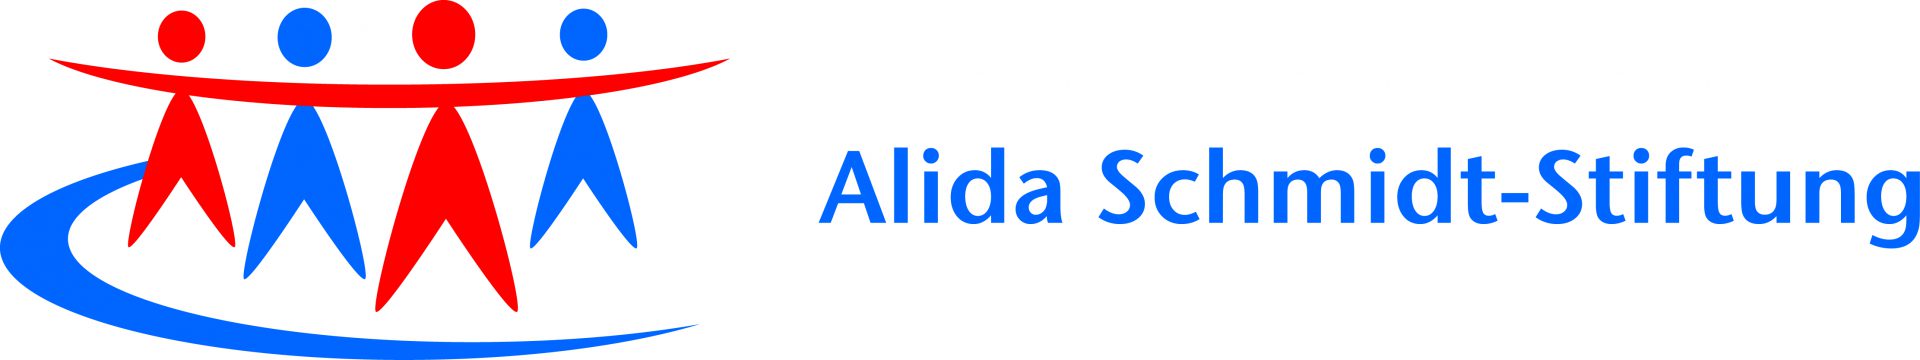 logo-alida-schmidt-stiftung-4c